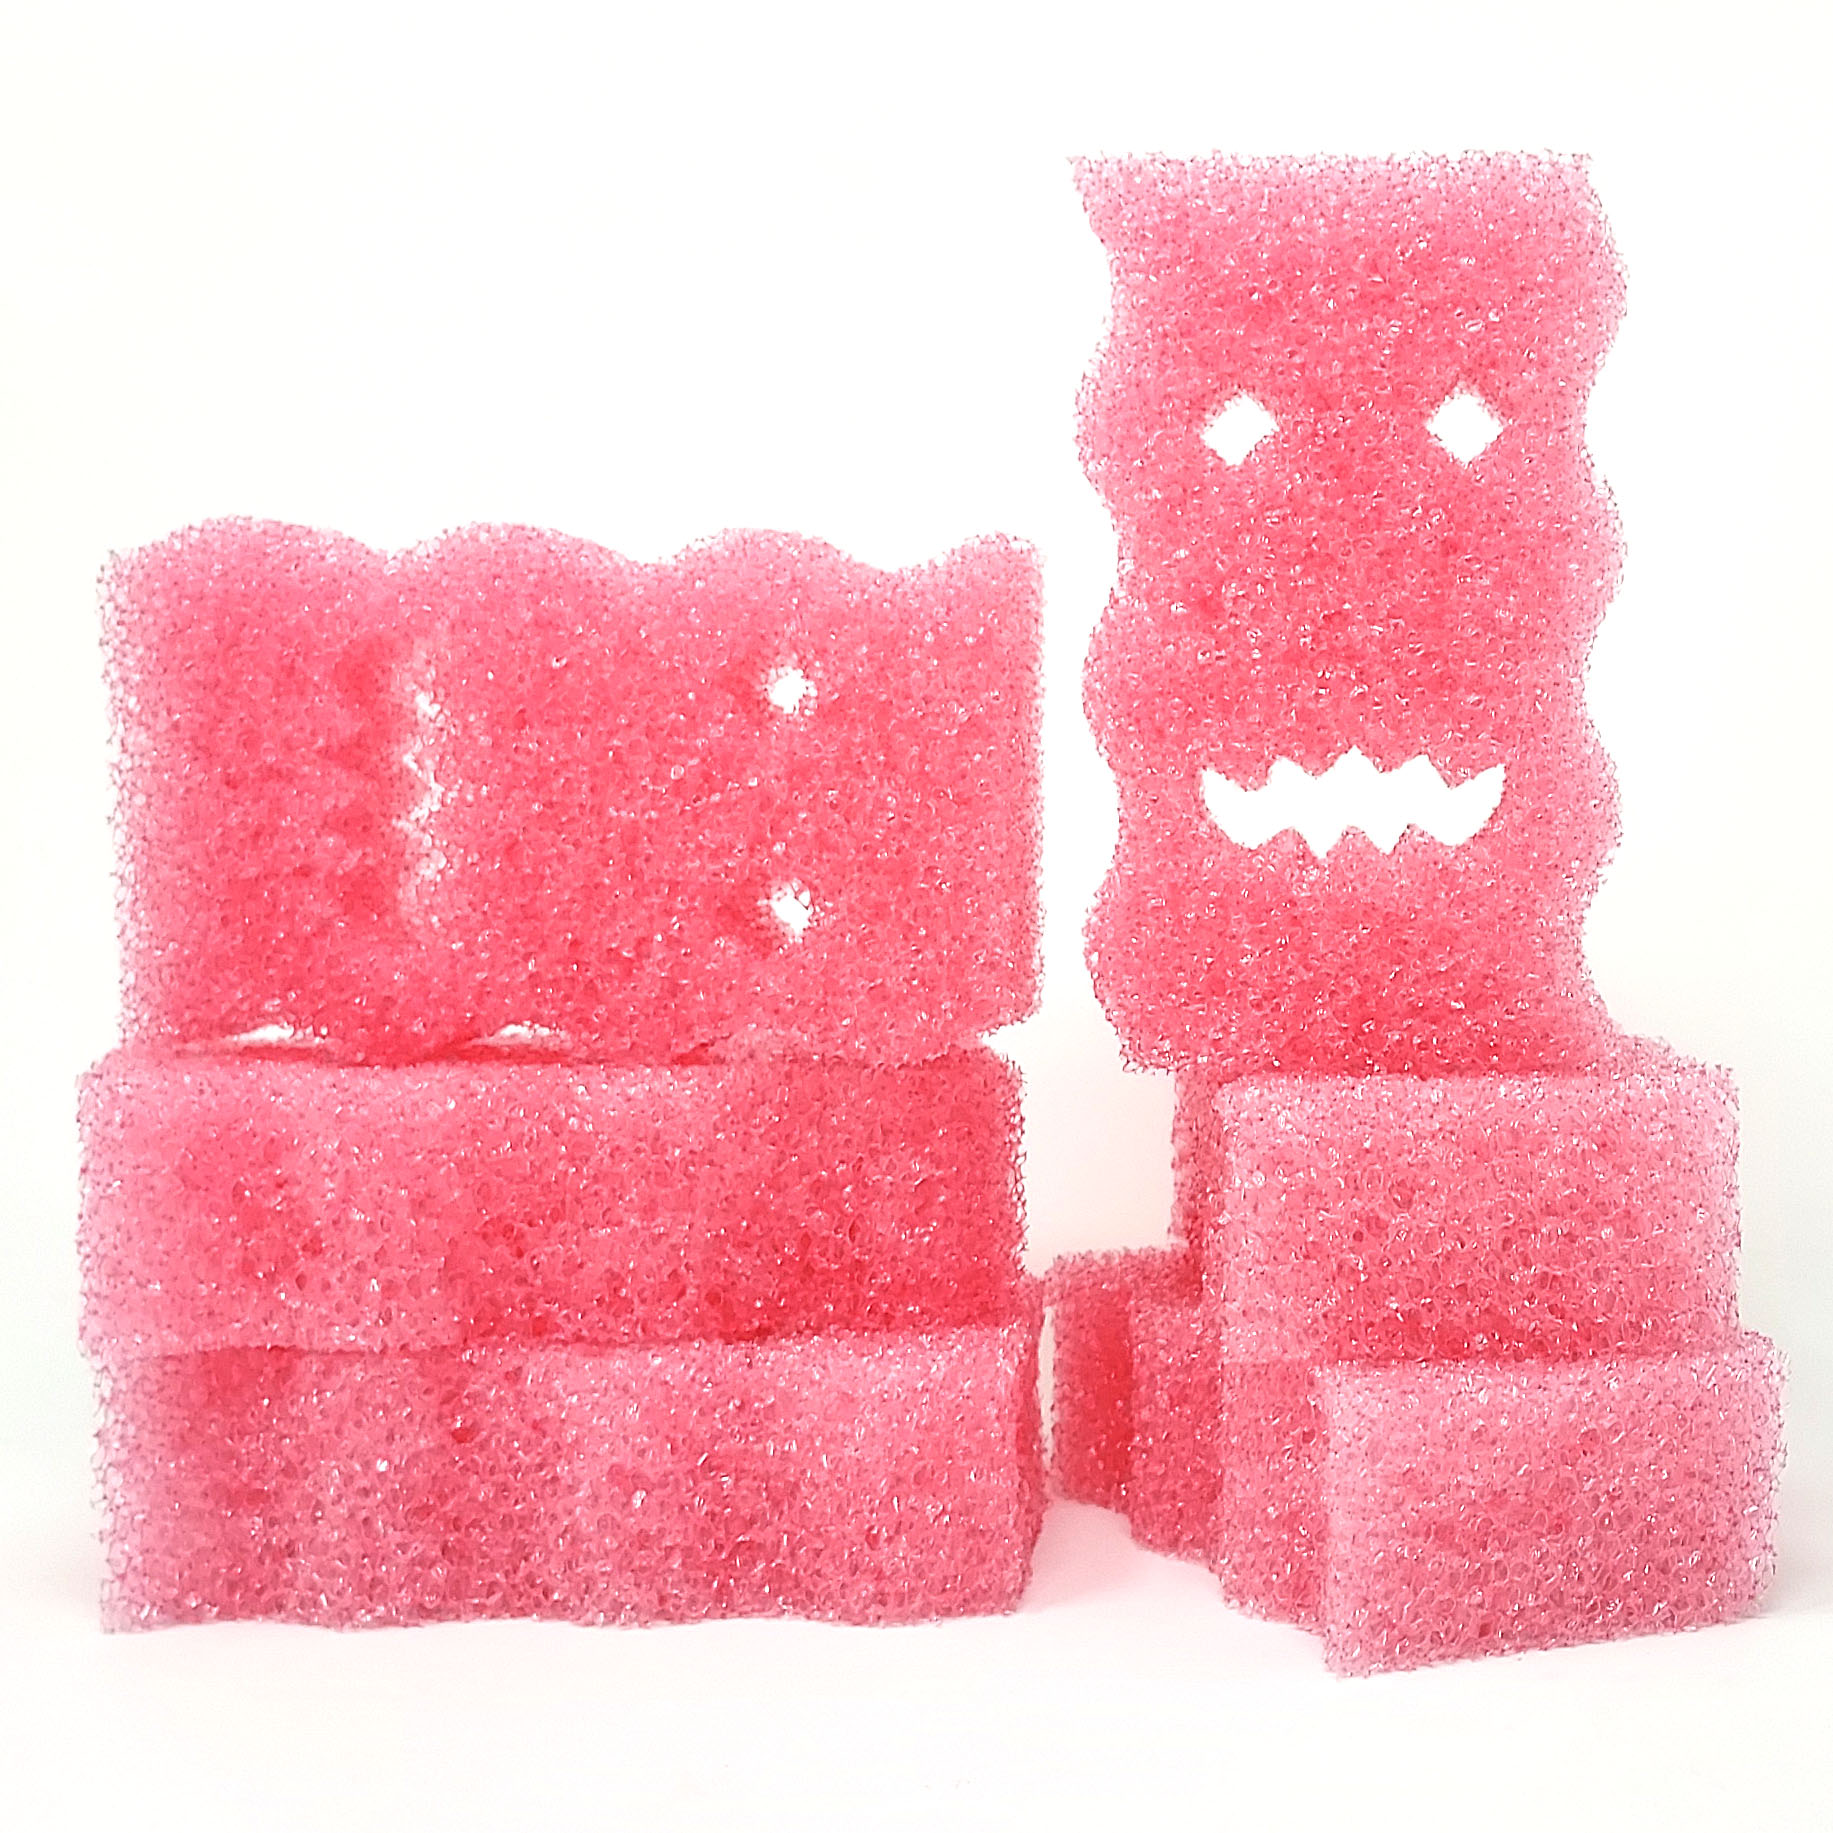 Monster No-face Scrub Sponge- Scratch-Free (6PK)